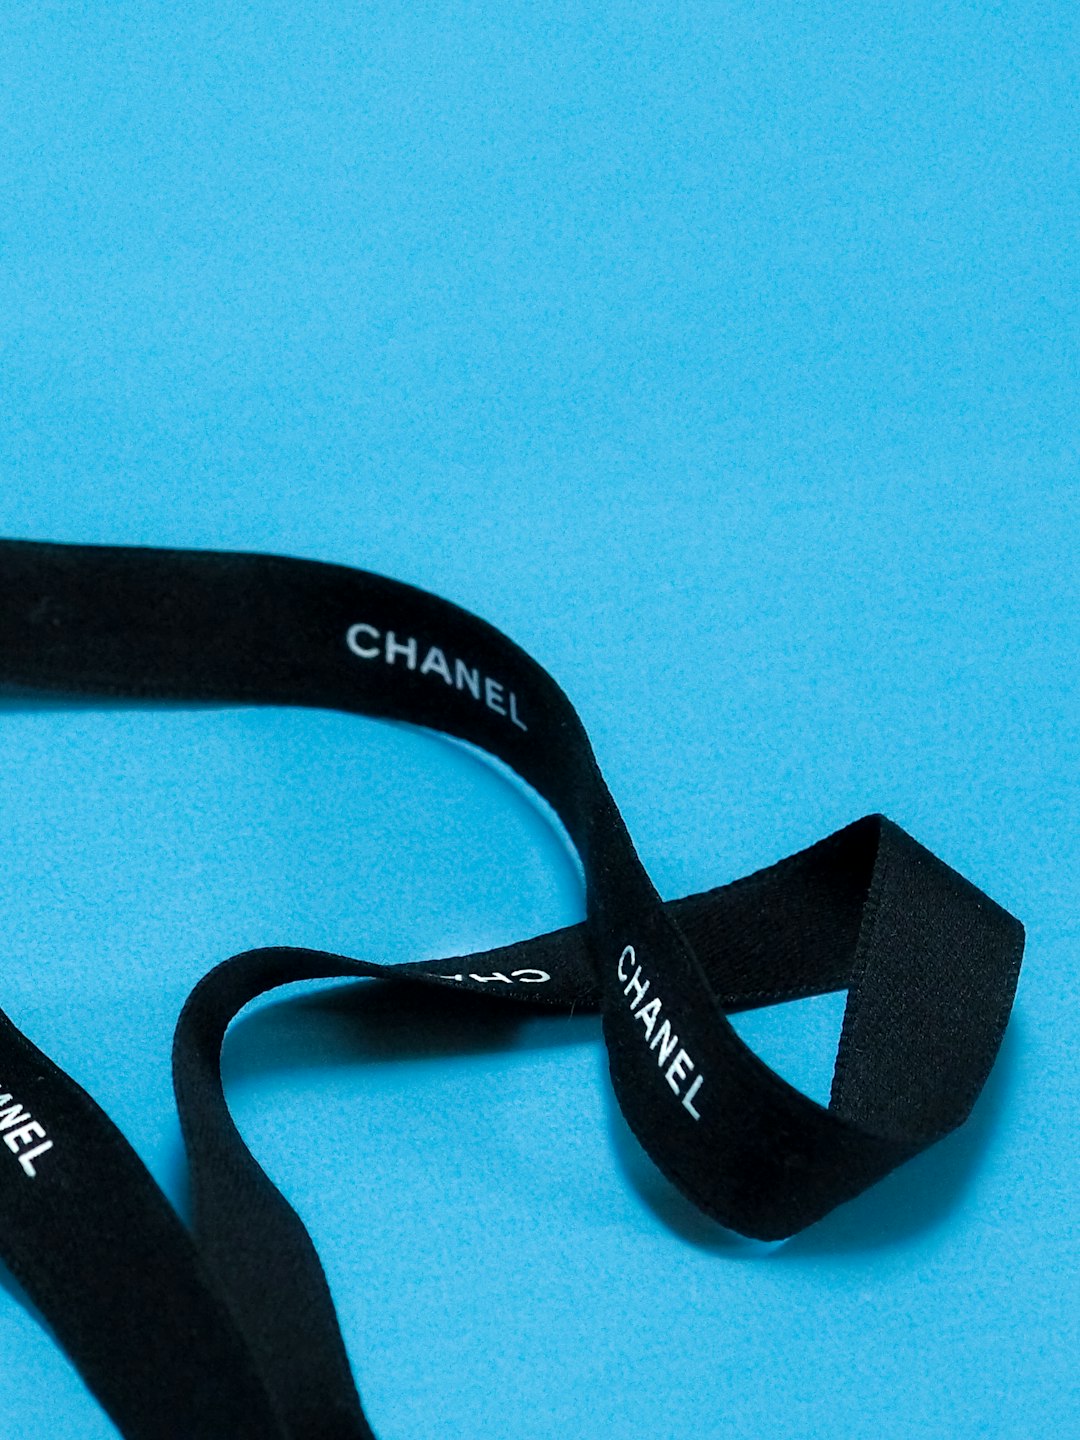 File:Chanel Gift Box 2018, Belgian Black, and White Carrara Marble.jpg -  Wikimedia Commons